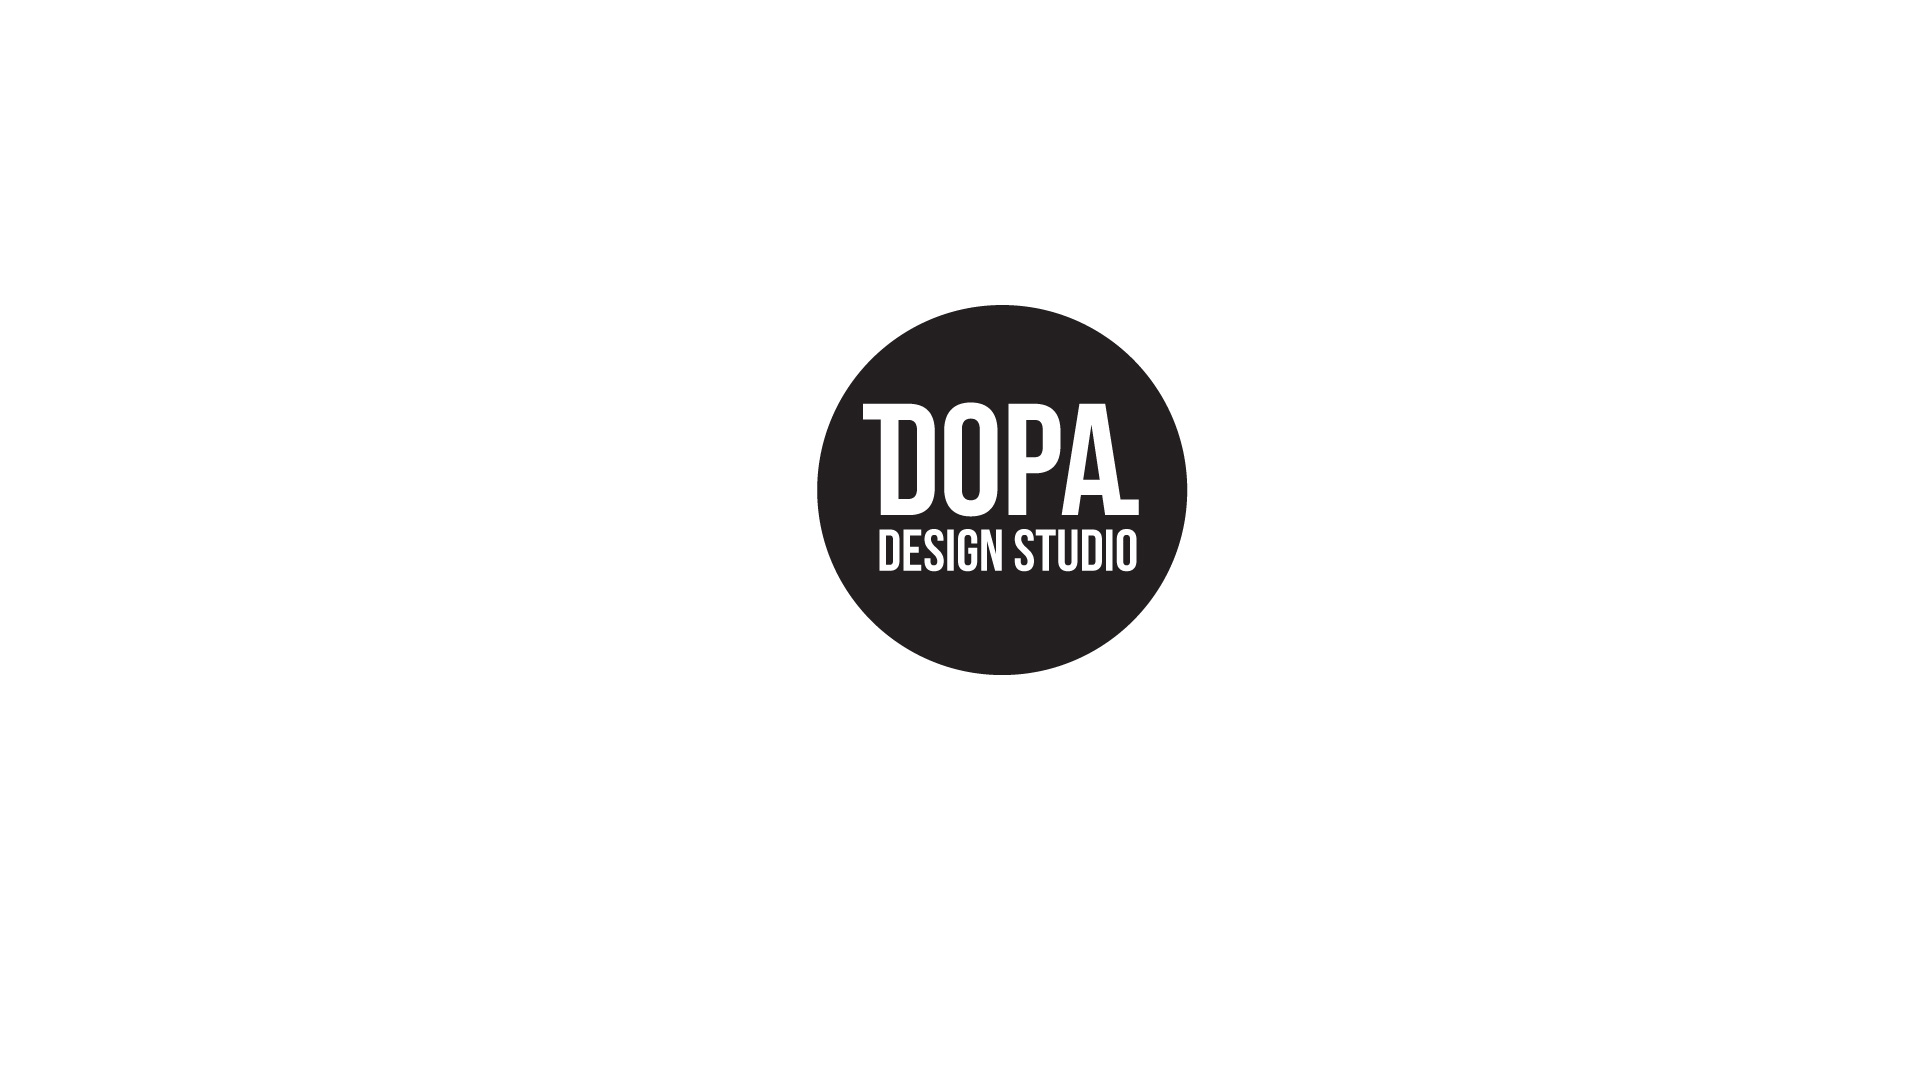 Dopa Design